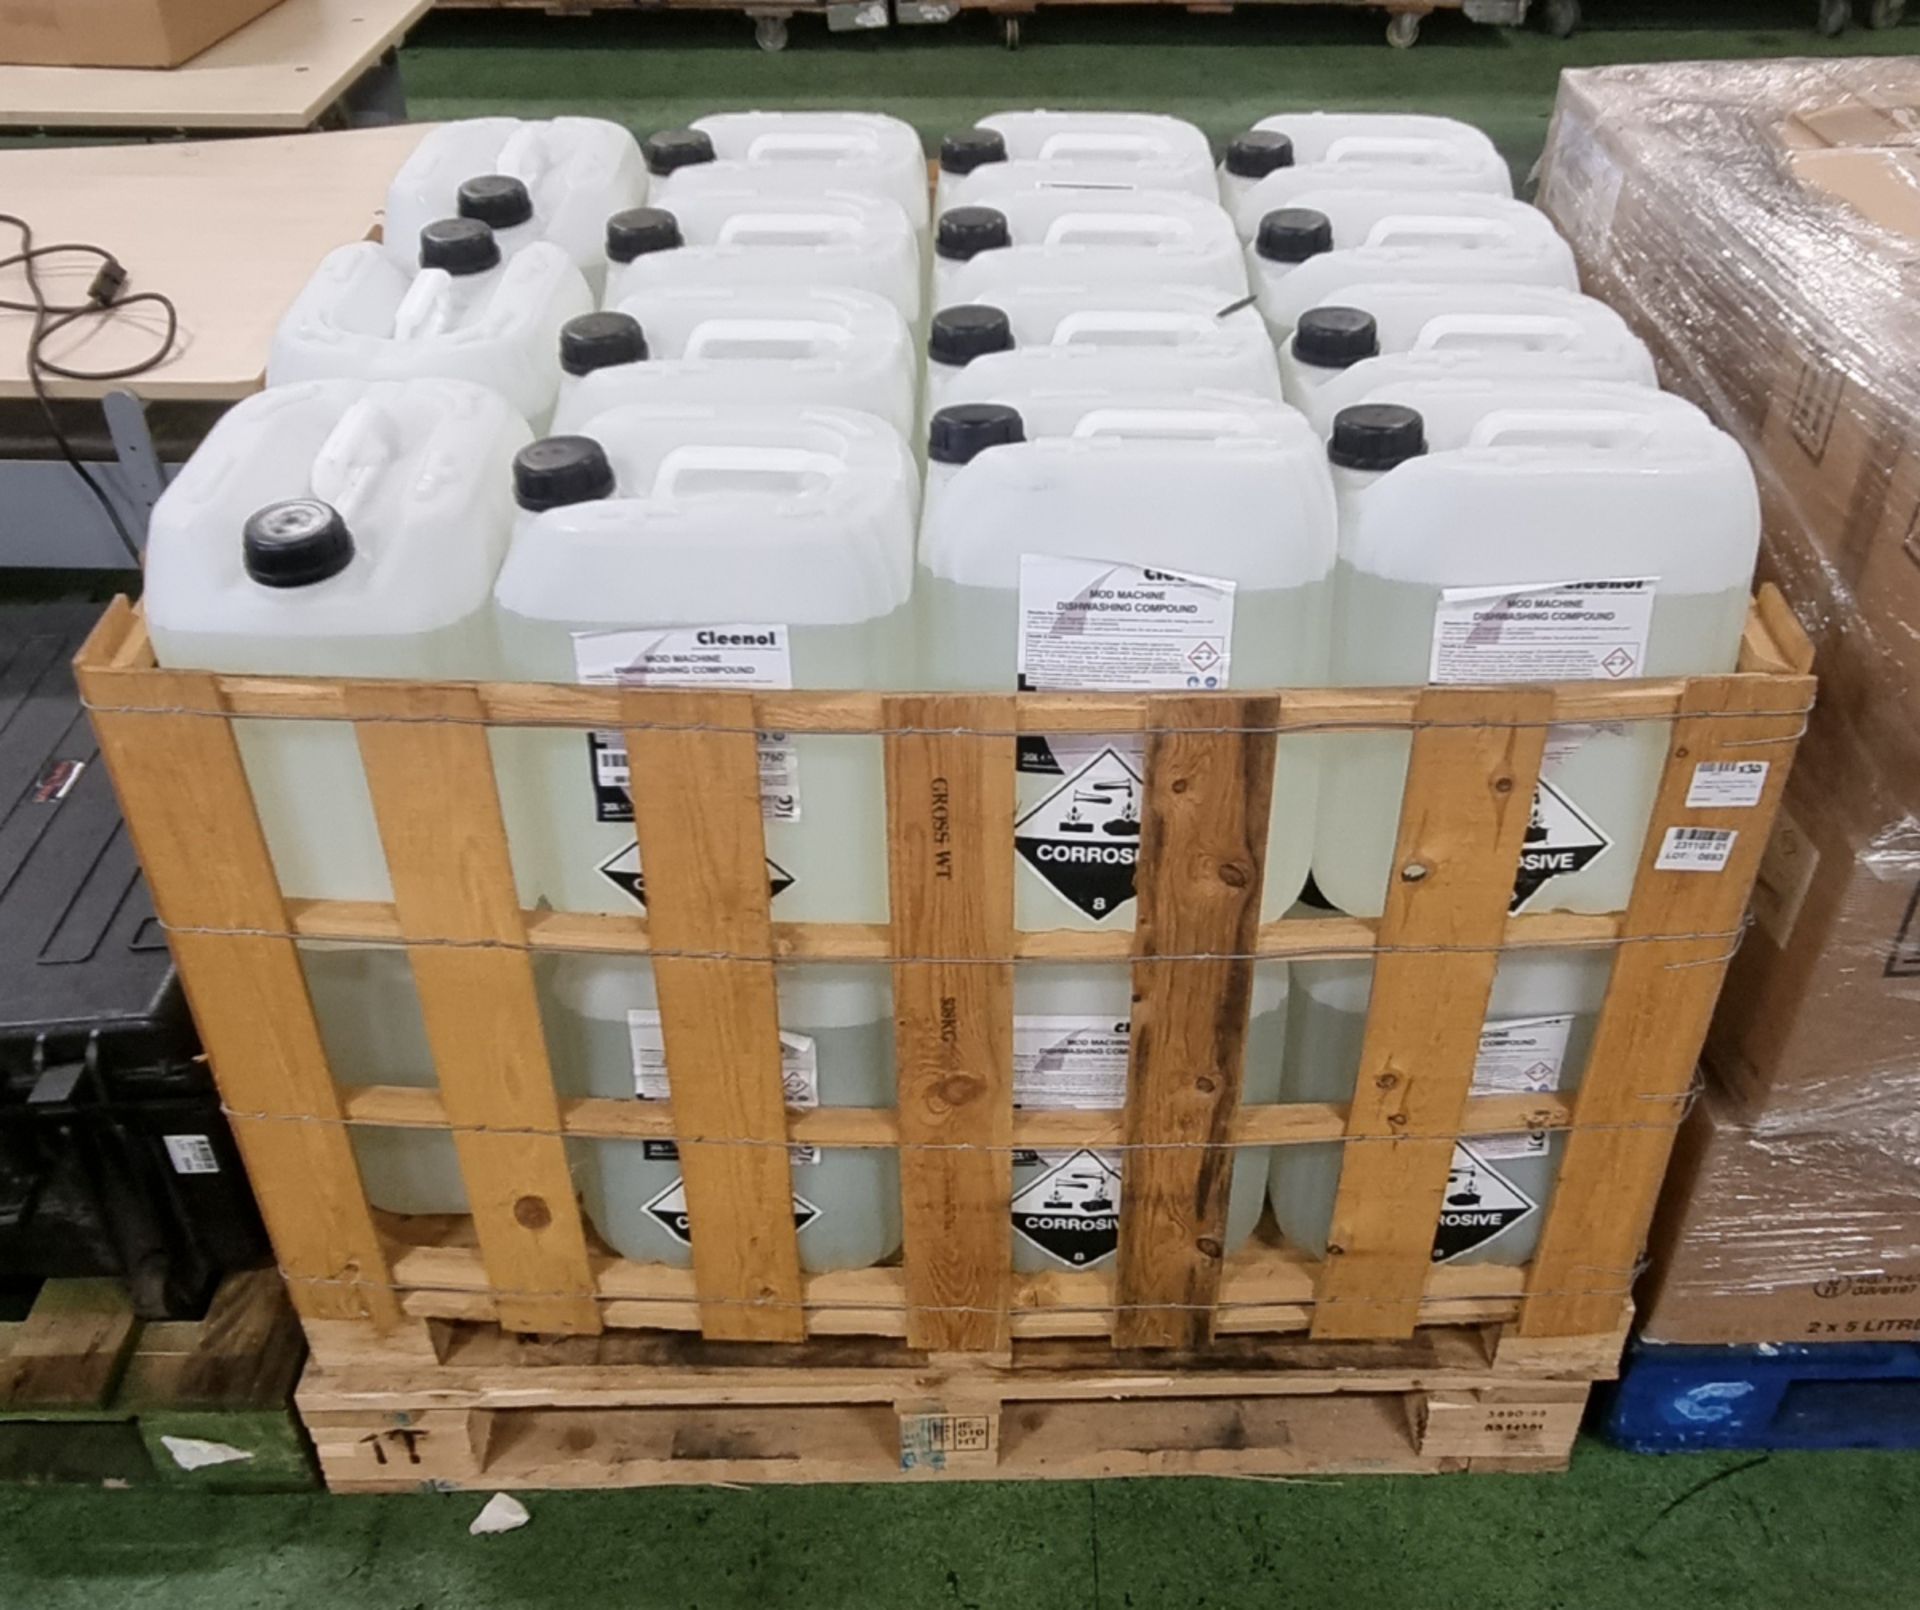 30x bottles of Cleenol Group machine dishwashing compound - 20L bottles